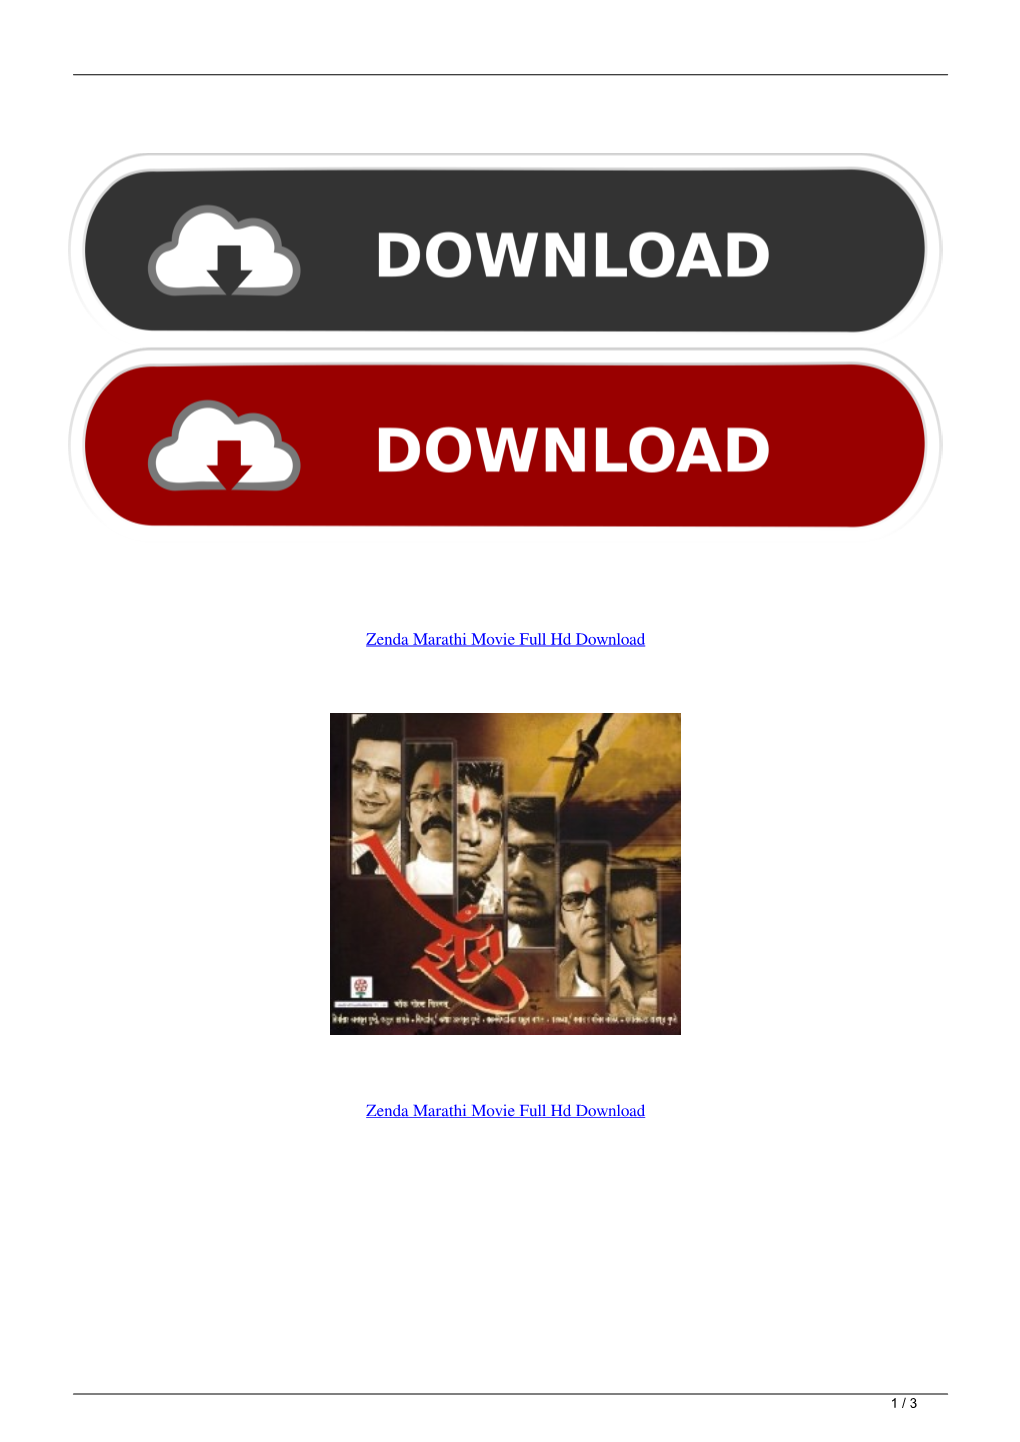 zenda marathi movie full hd free download